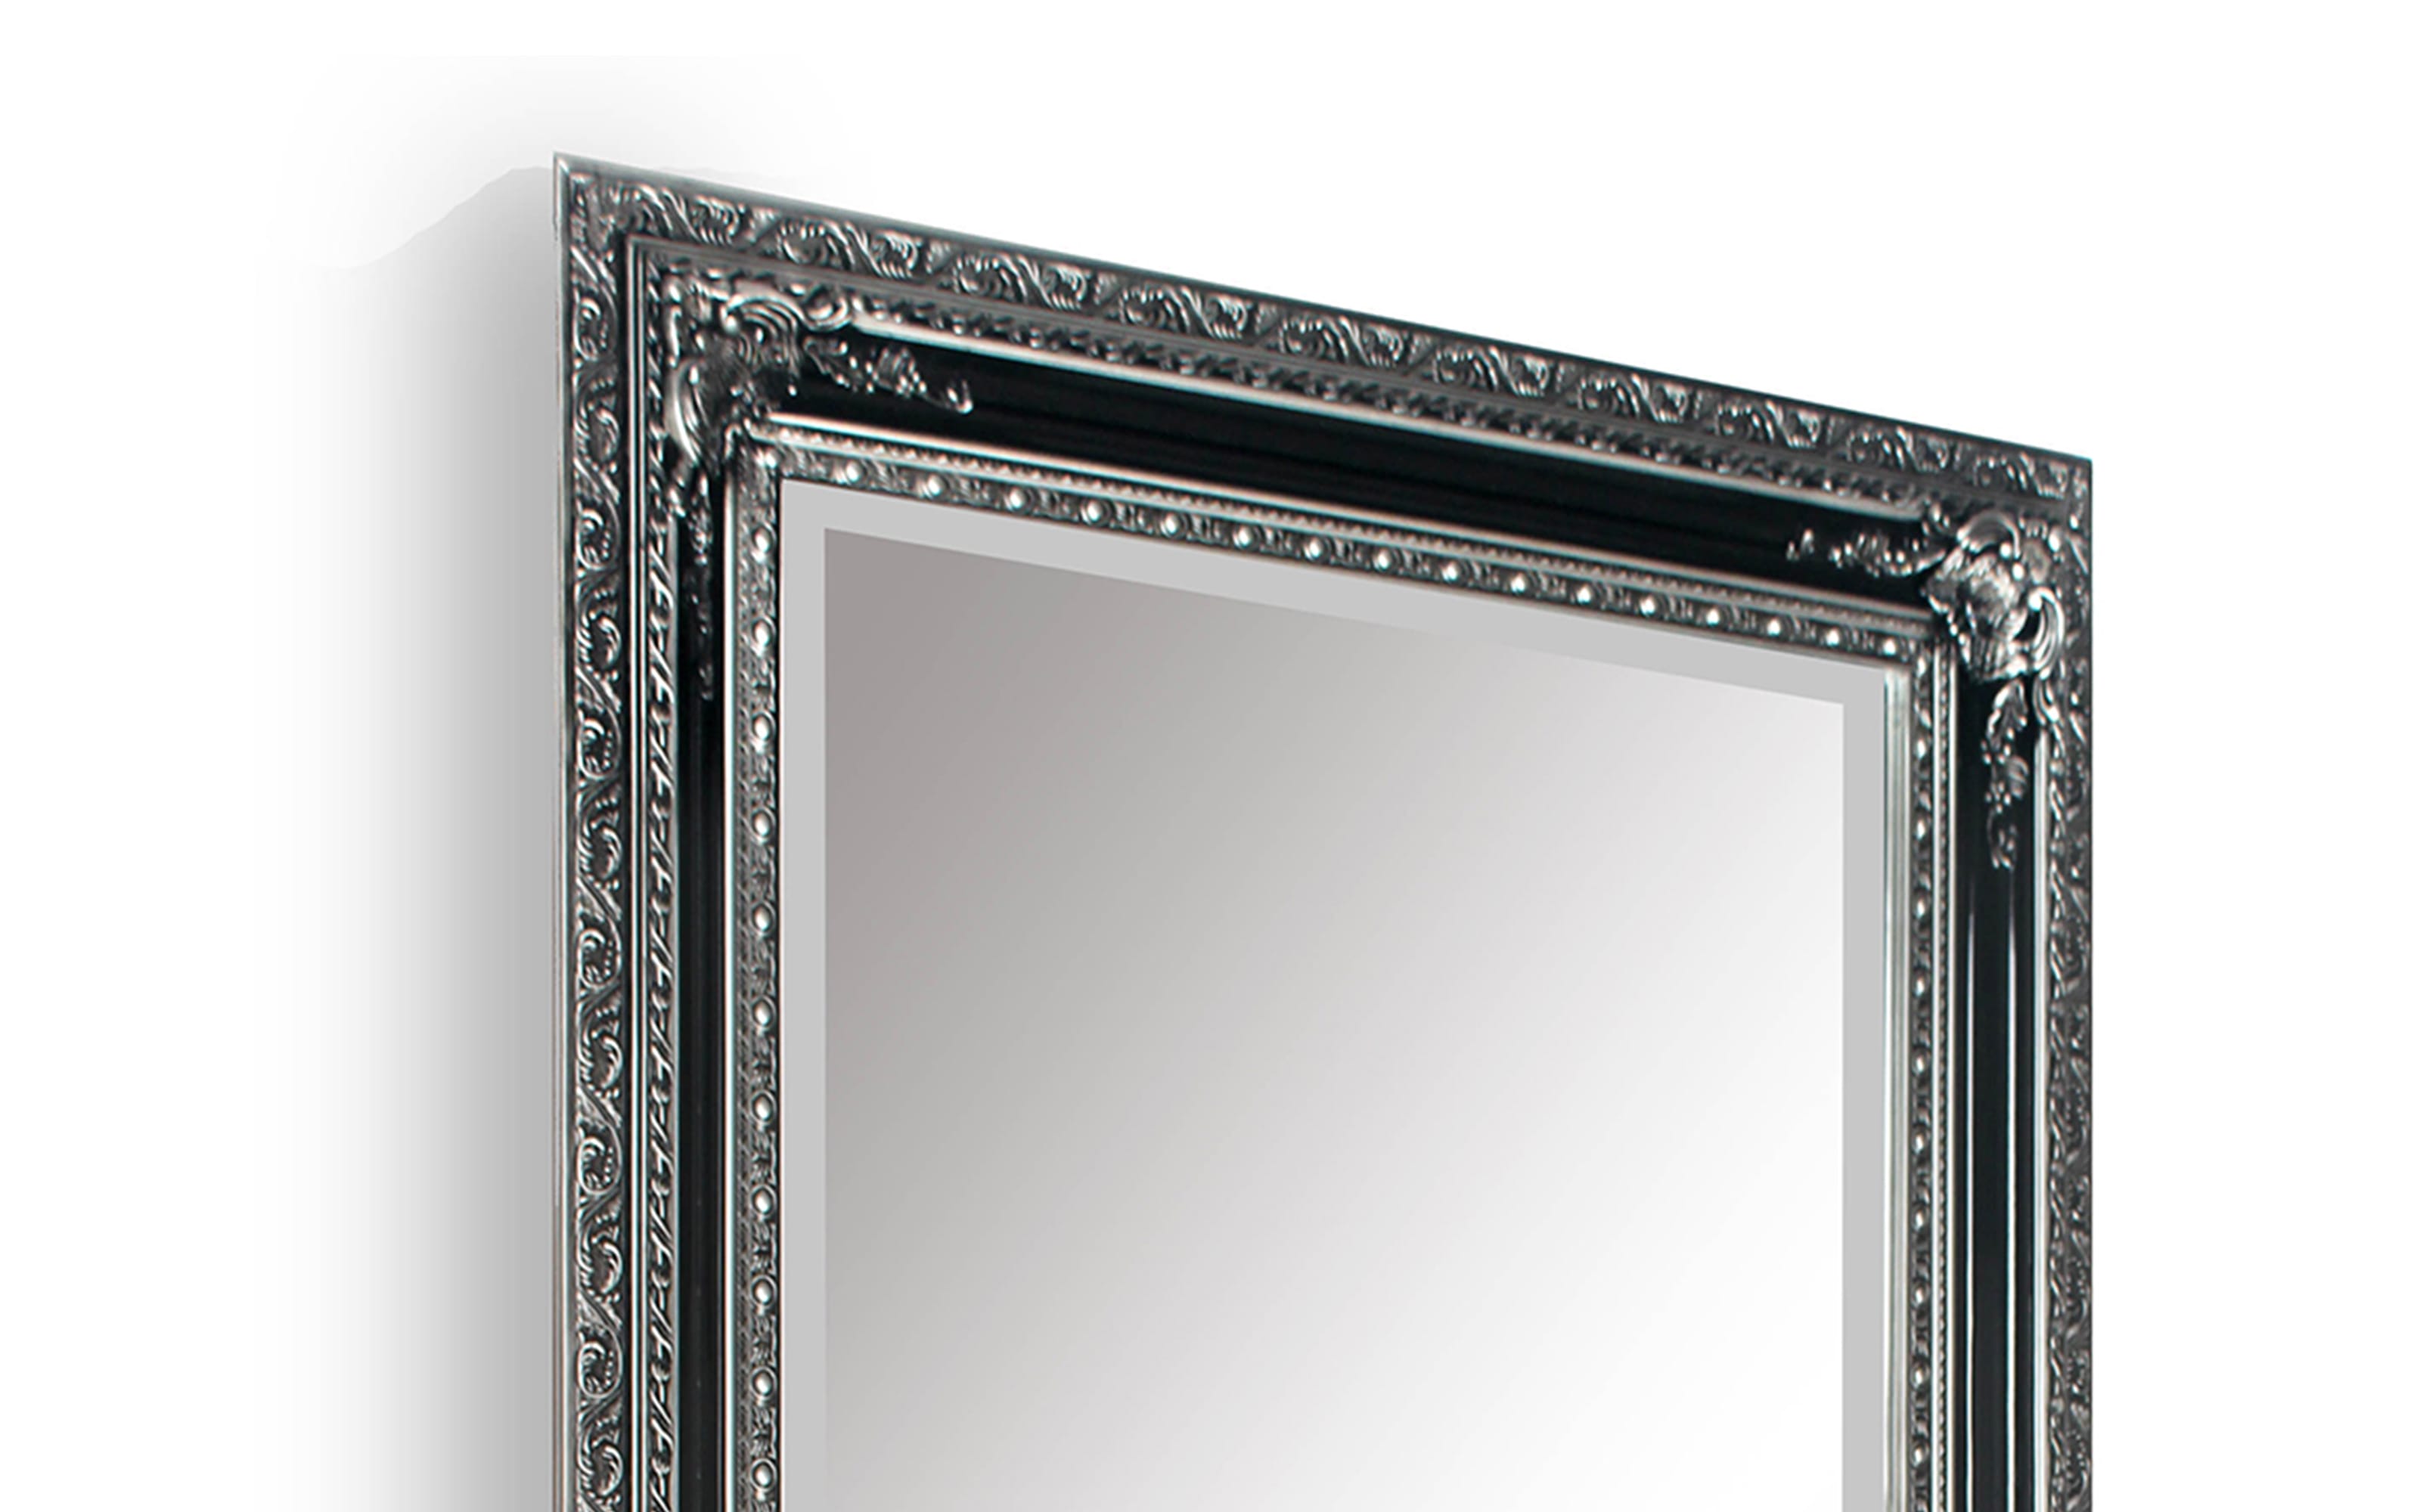 Rahmenspiegel Lara, schwarz/silberfarbig, 100 x 120 cm 